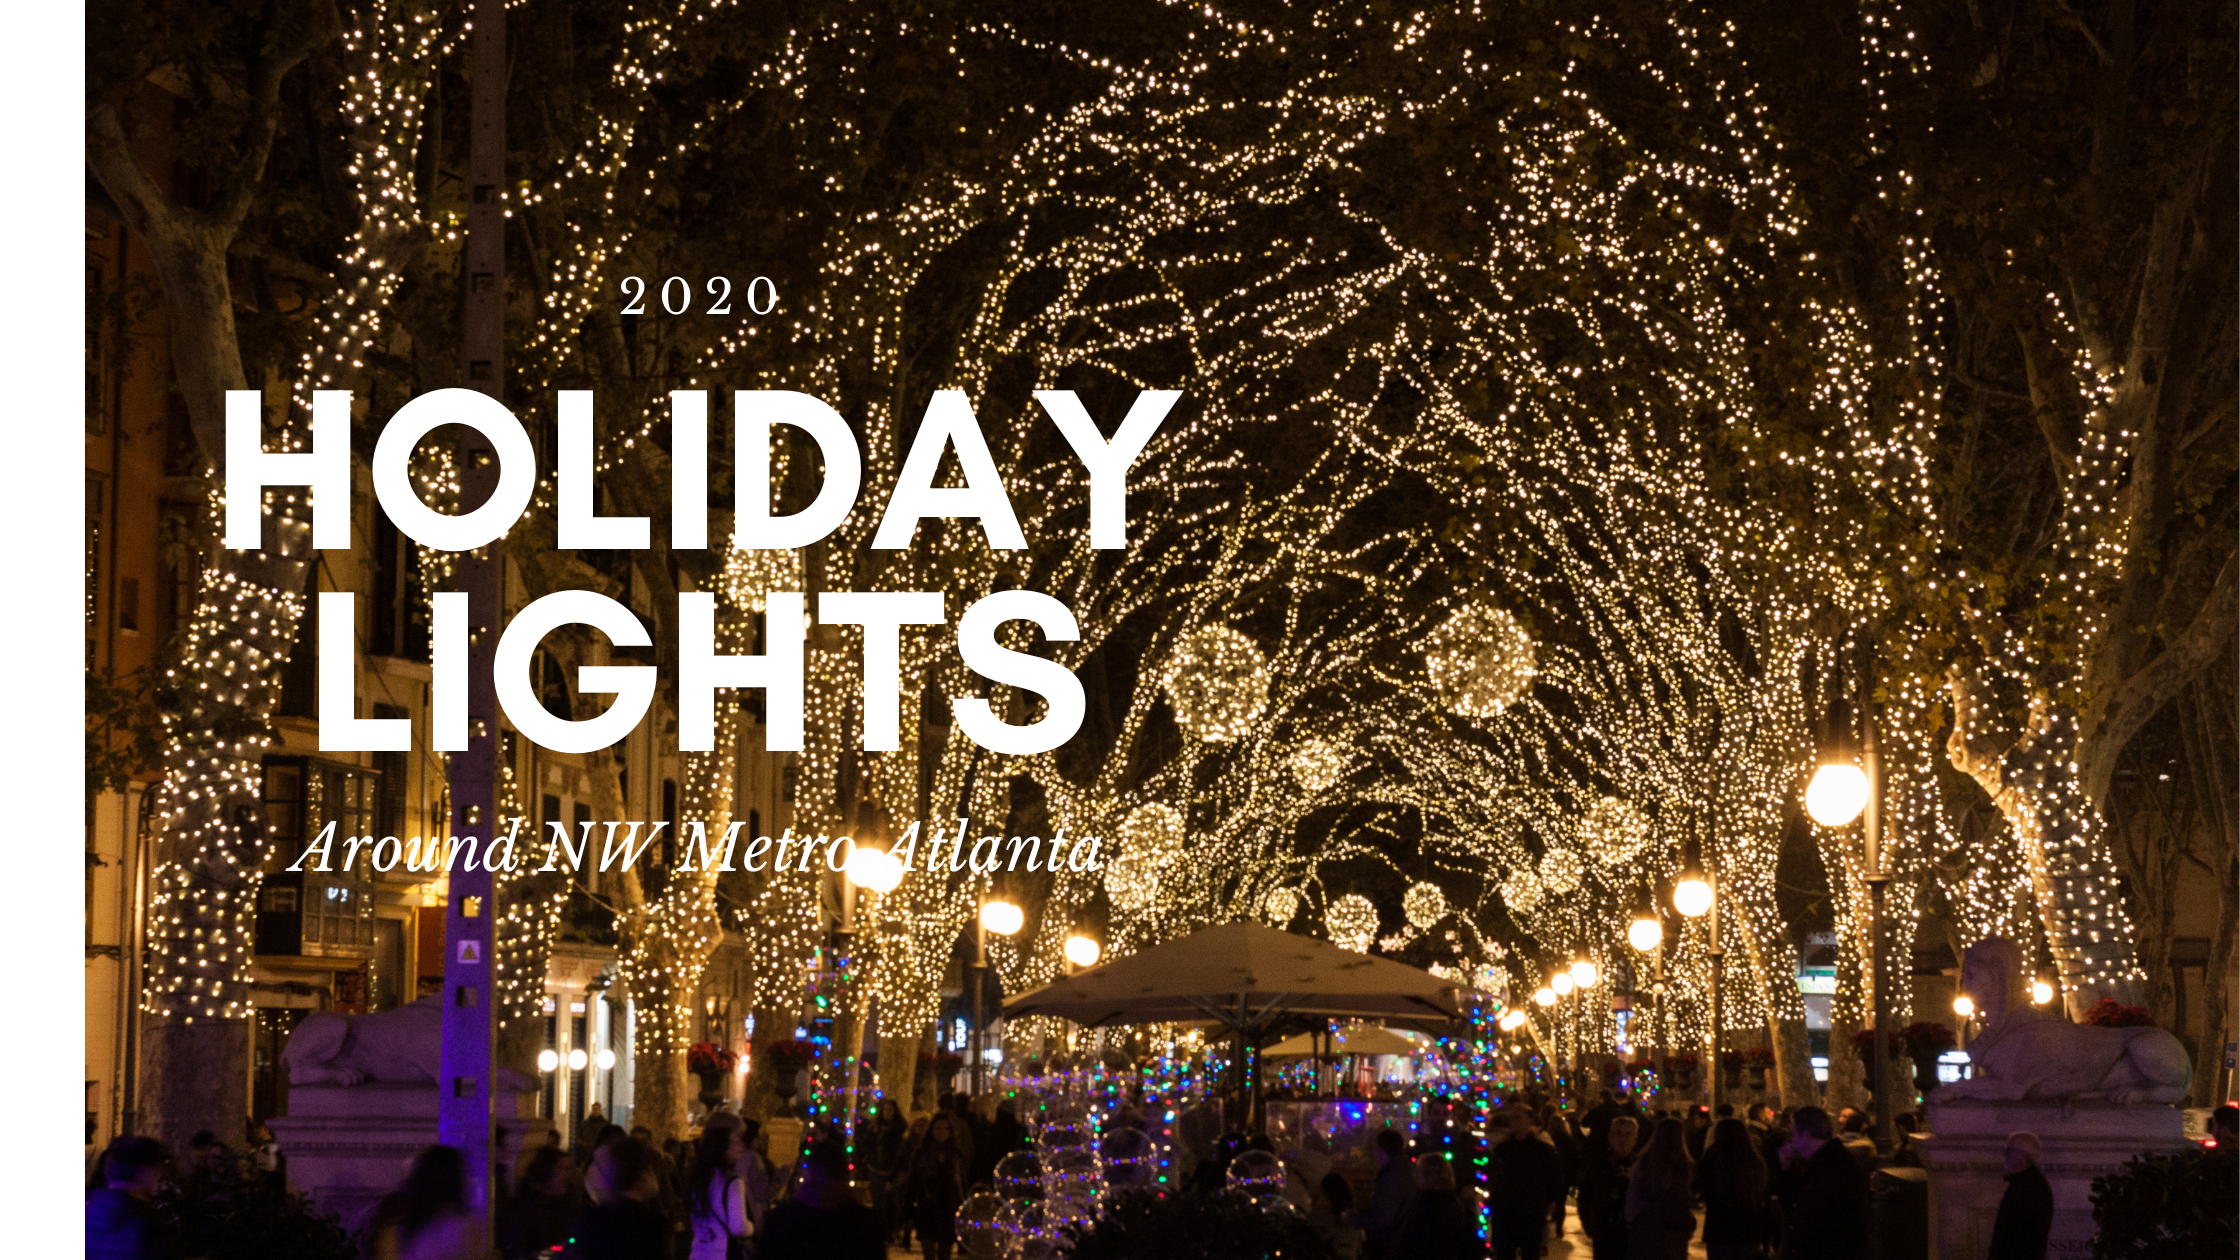 2020 Holiday Lights Around NW Metro Atlanta